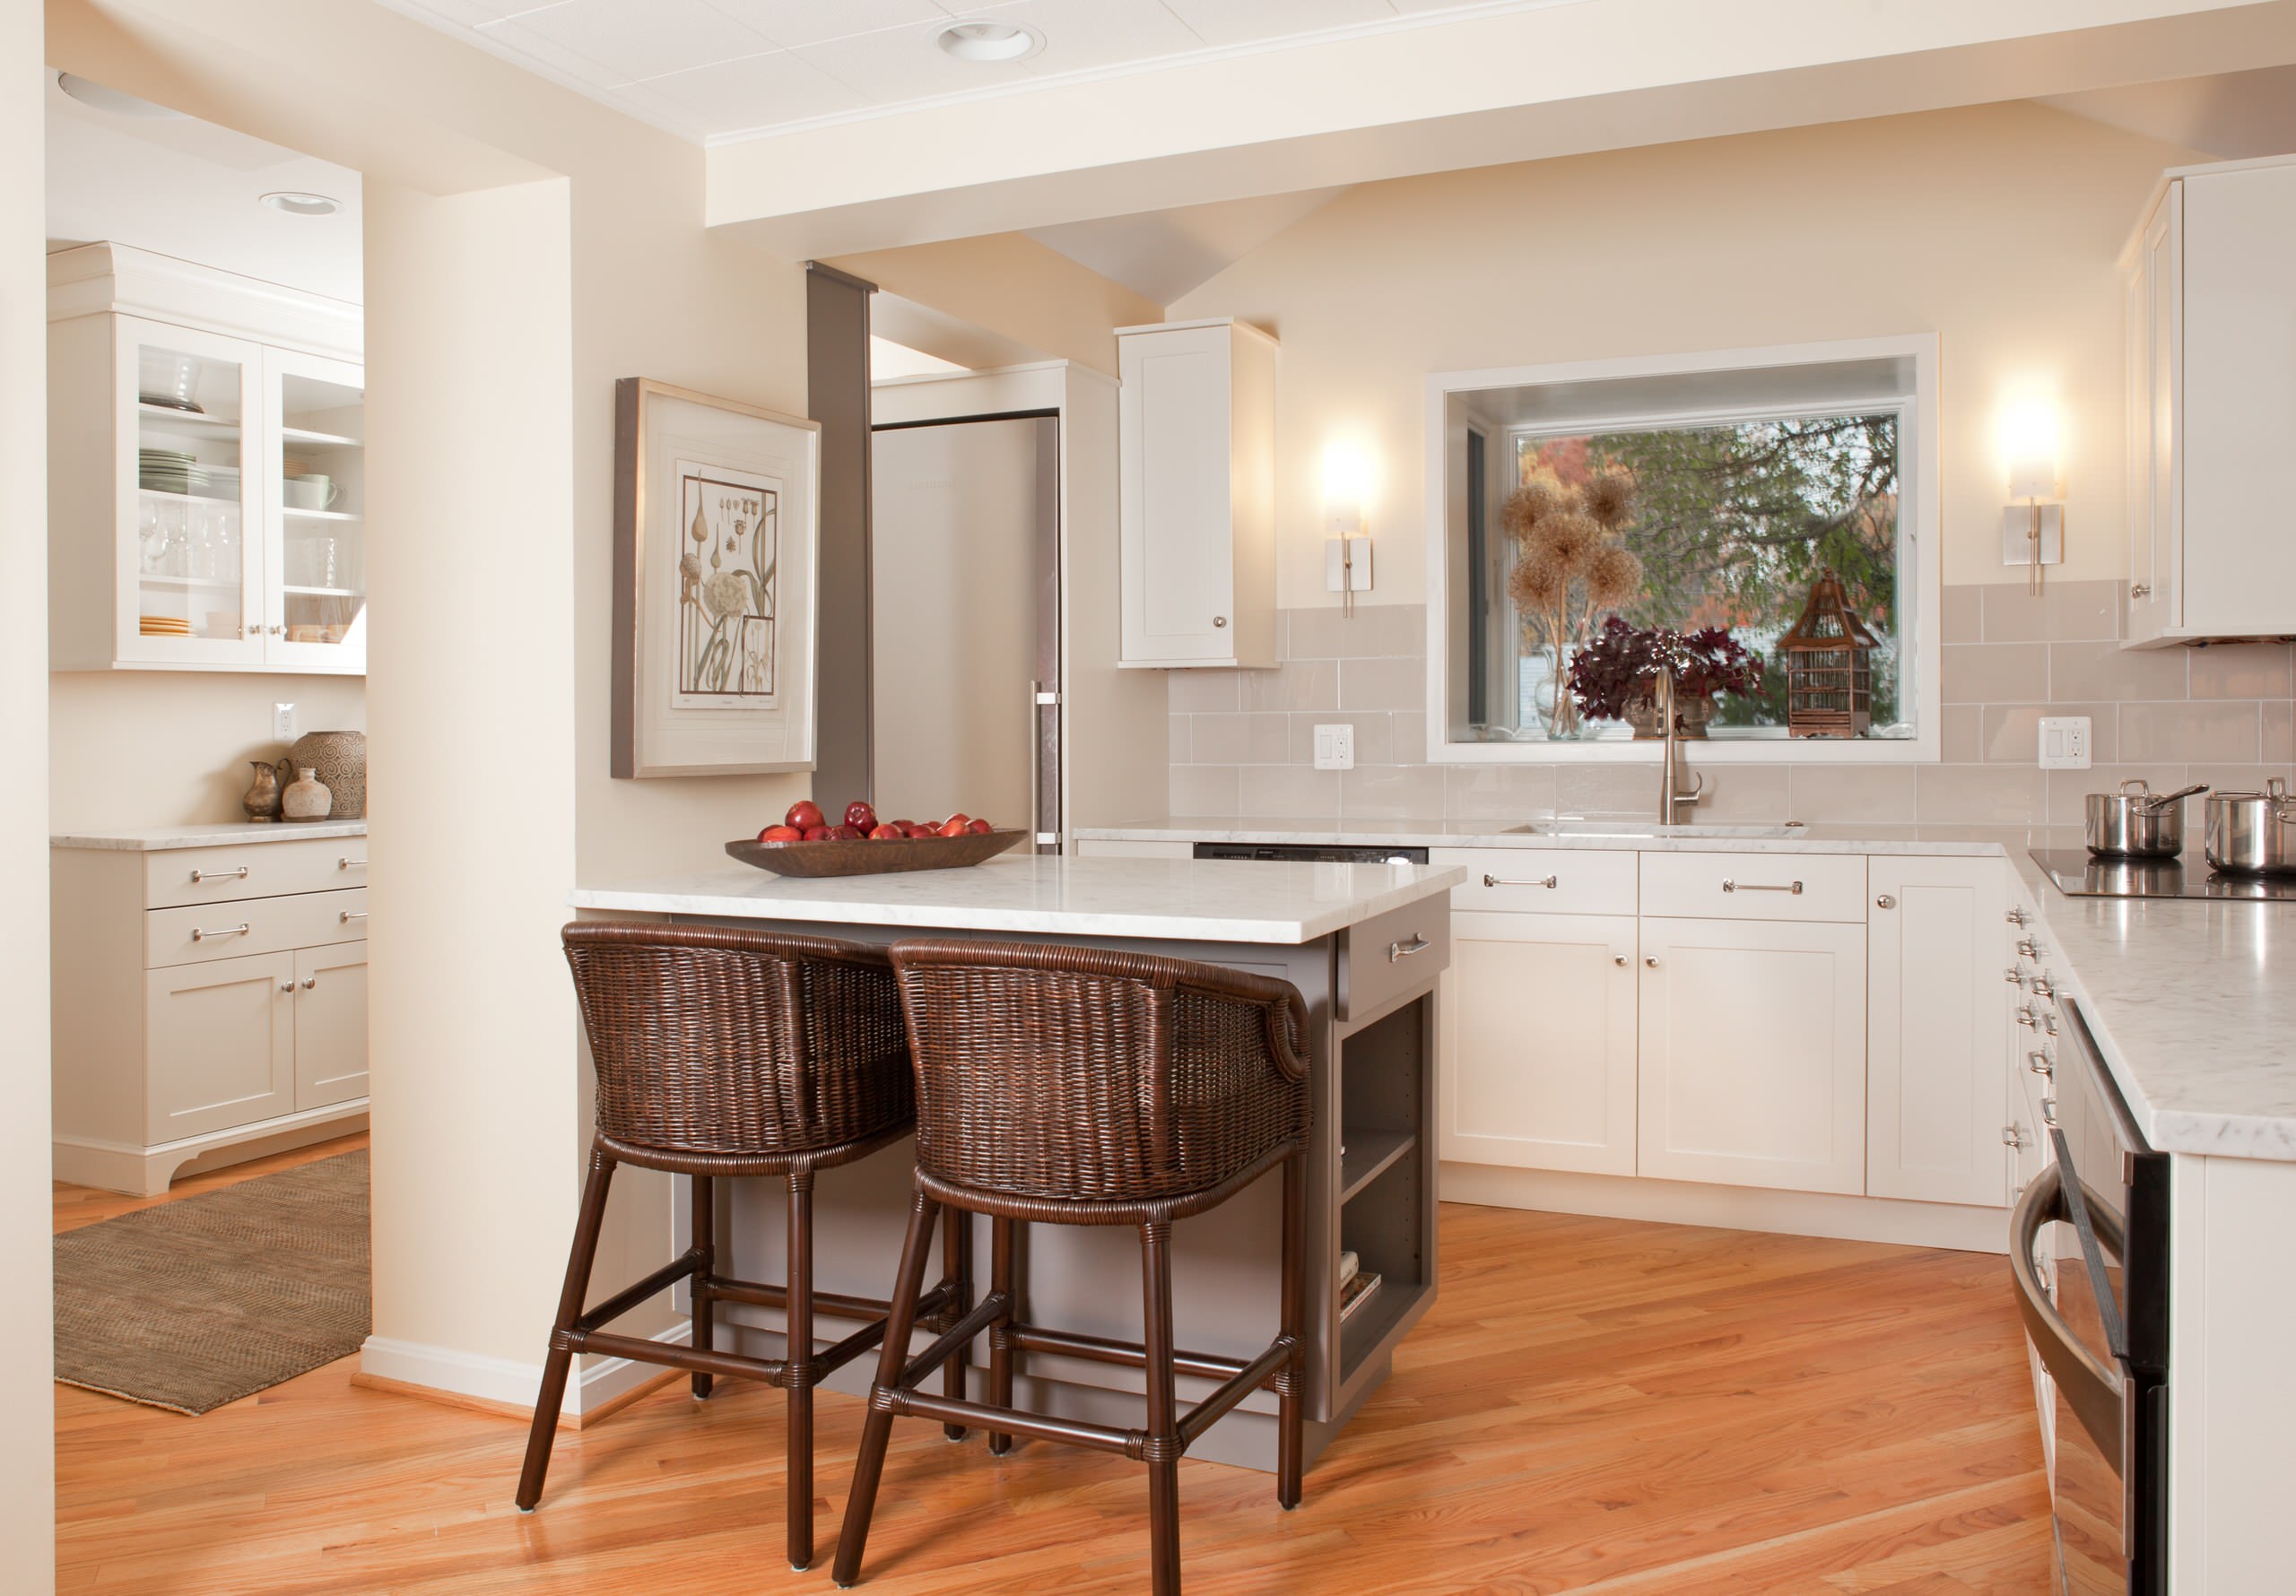 Standard kitchen cabinet height with Traditional Kitchen bridge faucet ceiling lighting flush mount tile backsplash